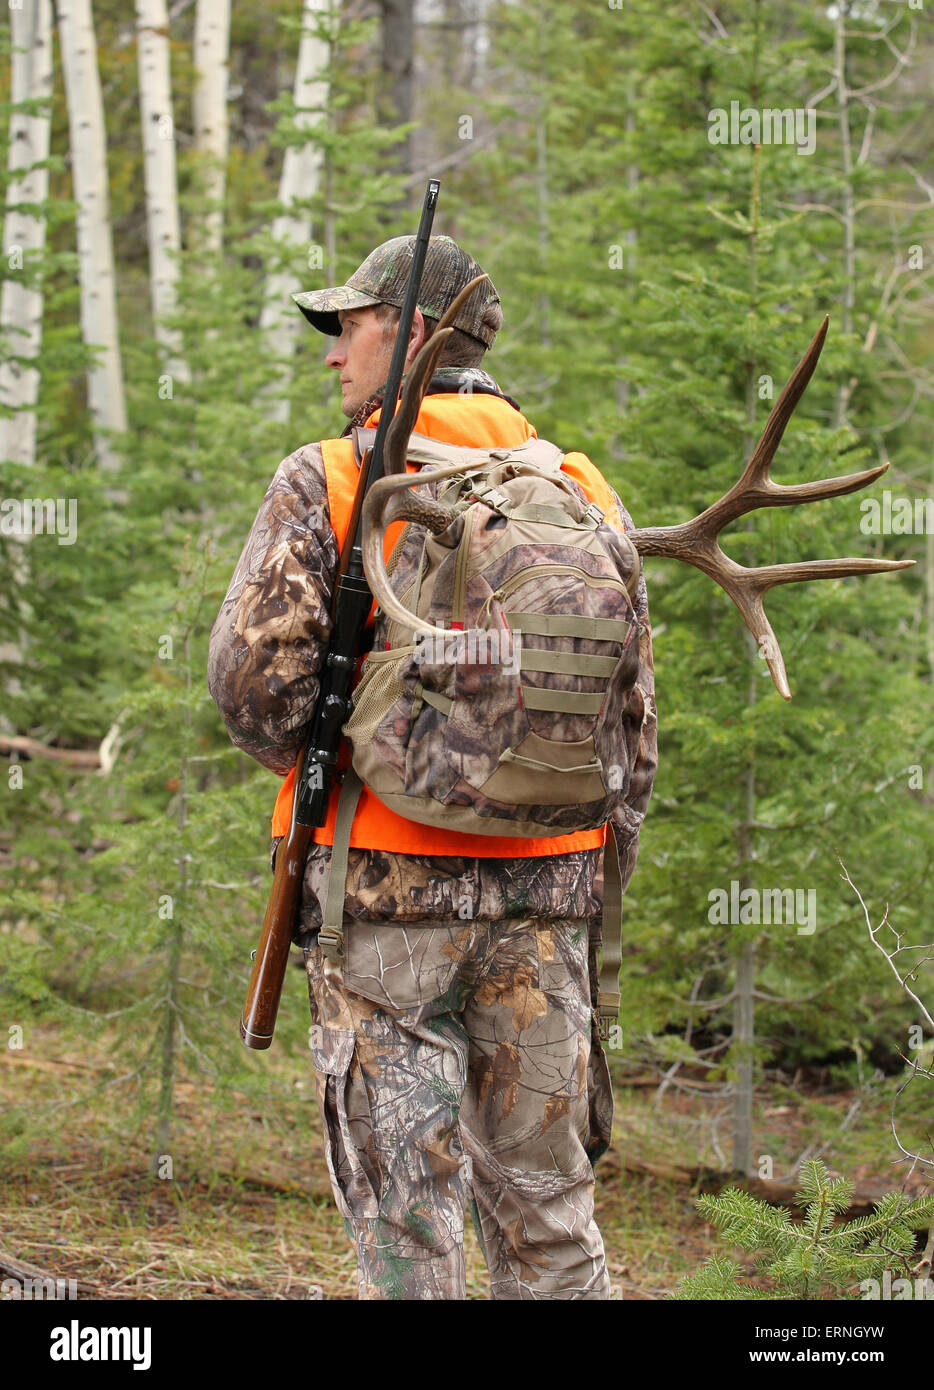 Carabine hunter réussie walking in woods Banque D'Images